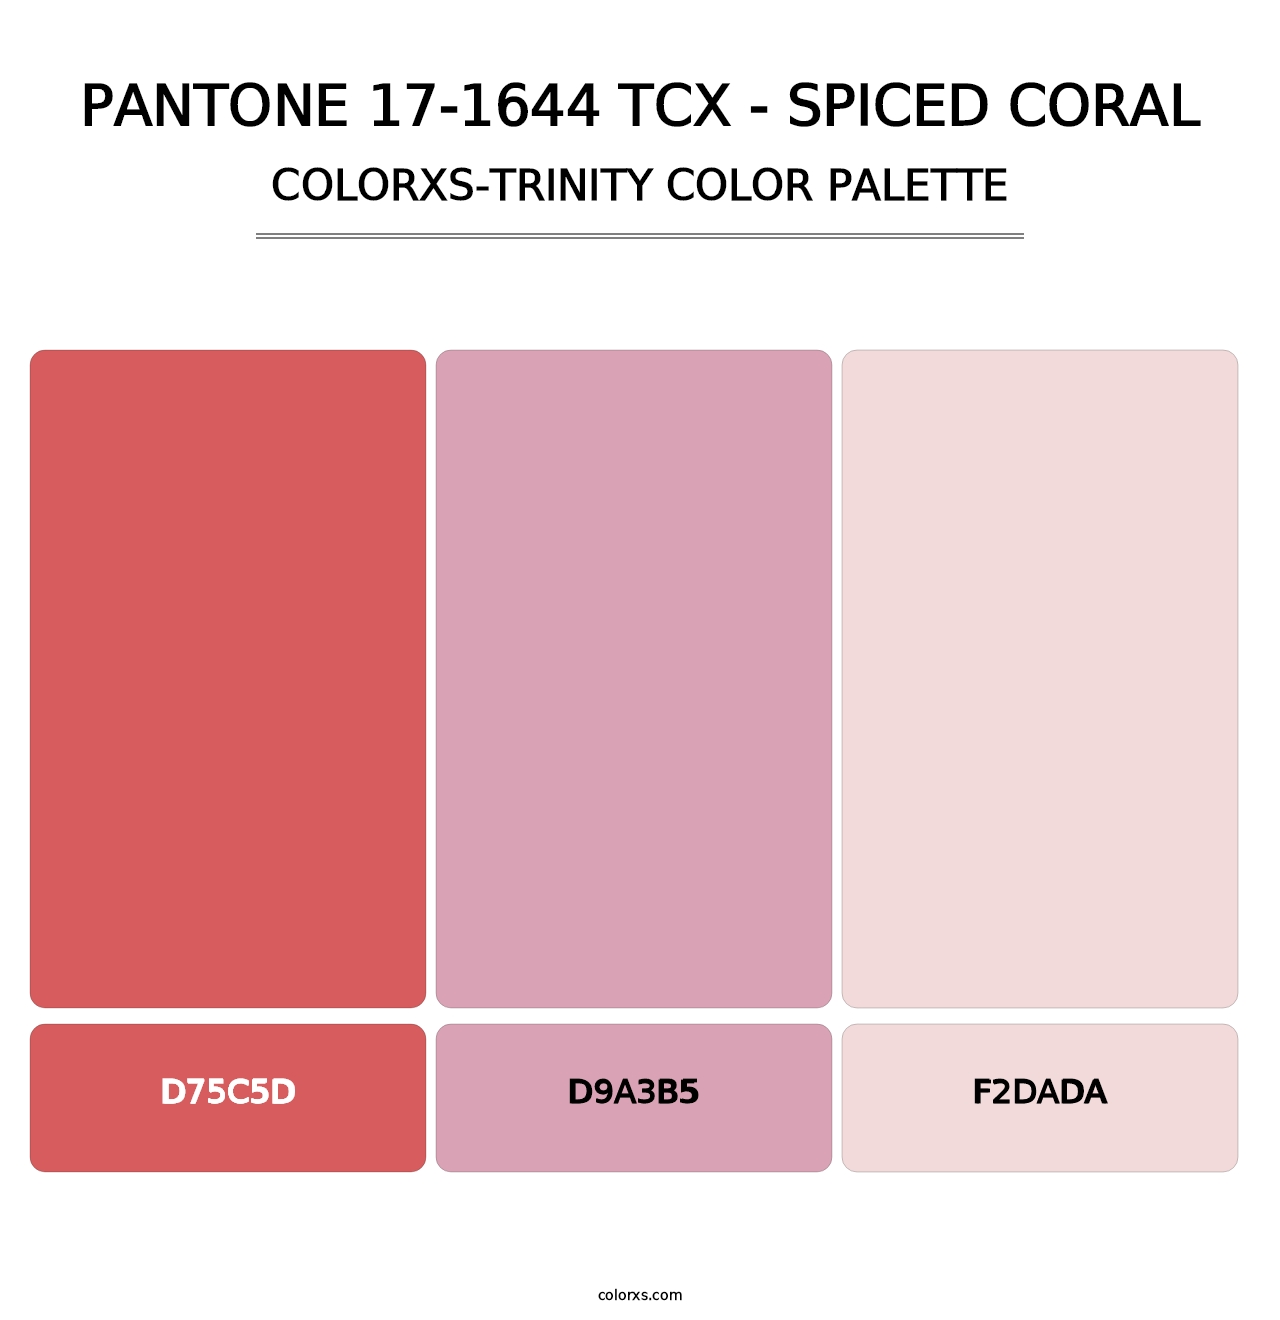 PANTONE 17-1644 TCX - Spiced Coral - Colorxs Trinity Palette